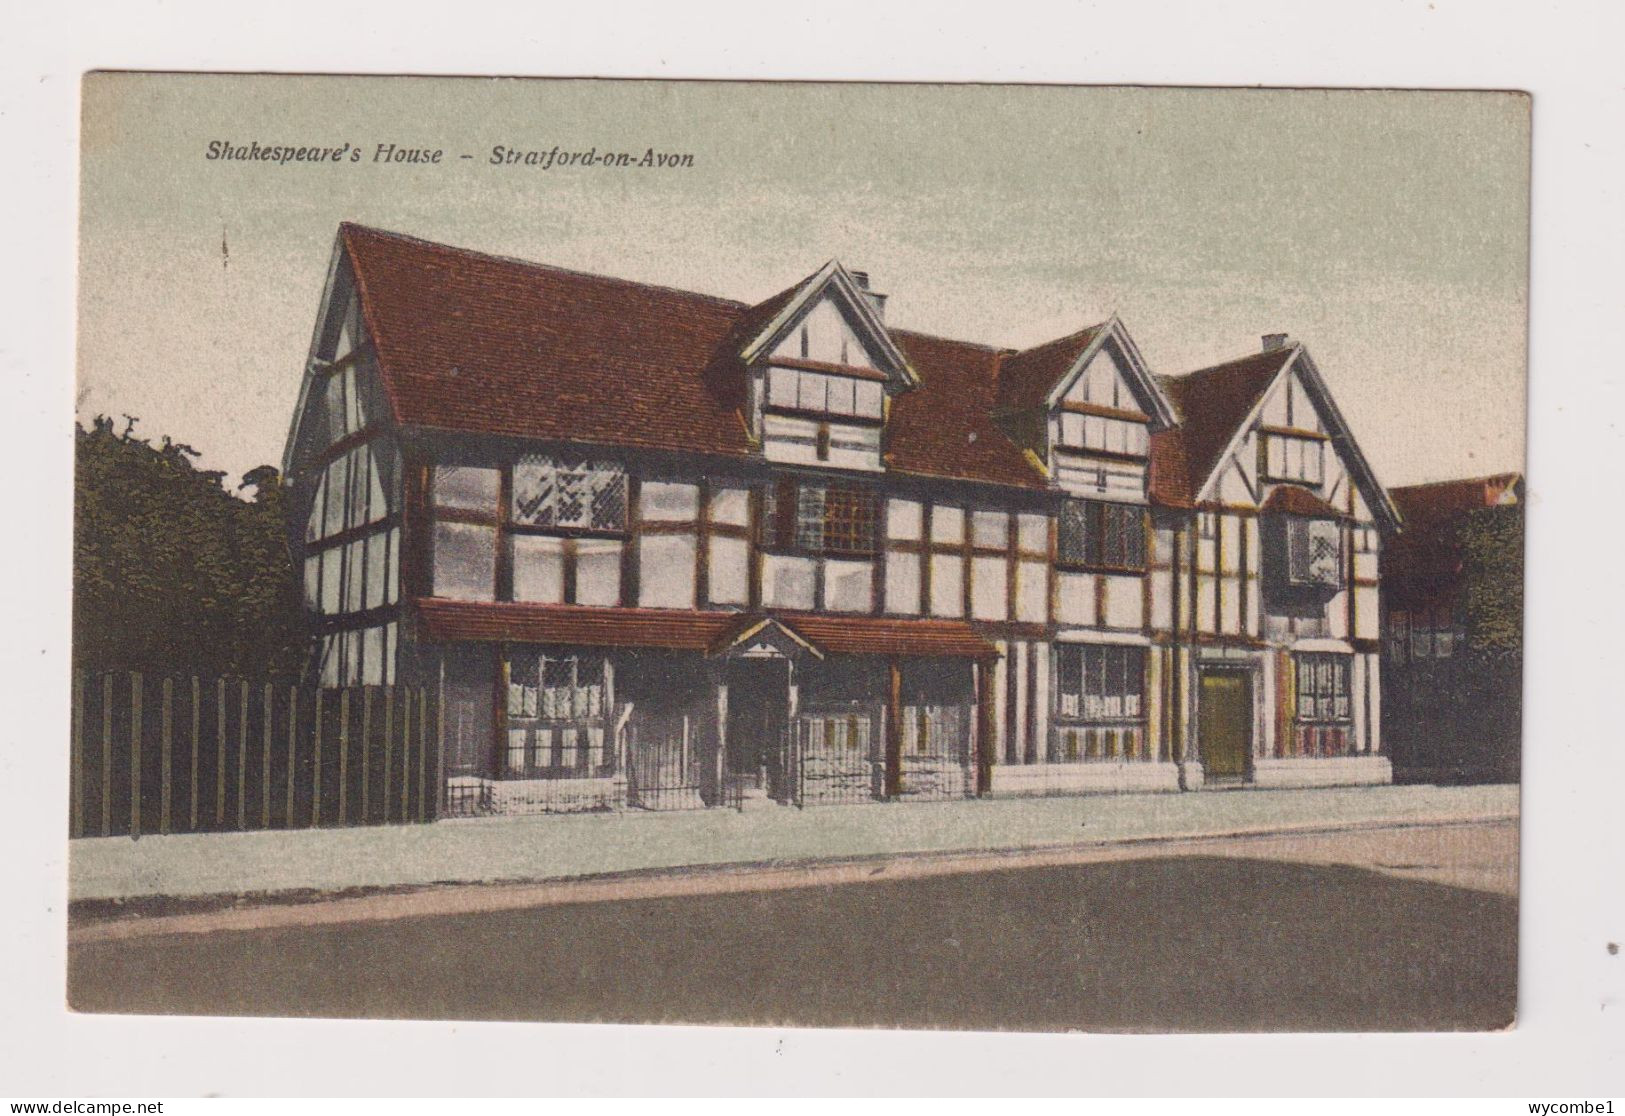 ENGLAND - Stratford Upon Avon Shakespeare's House Unused Vintage Postcard - Stratford Upon Avon